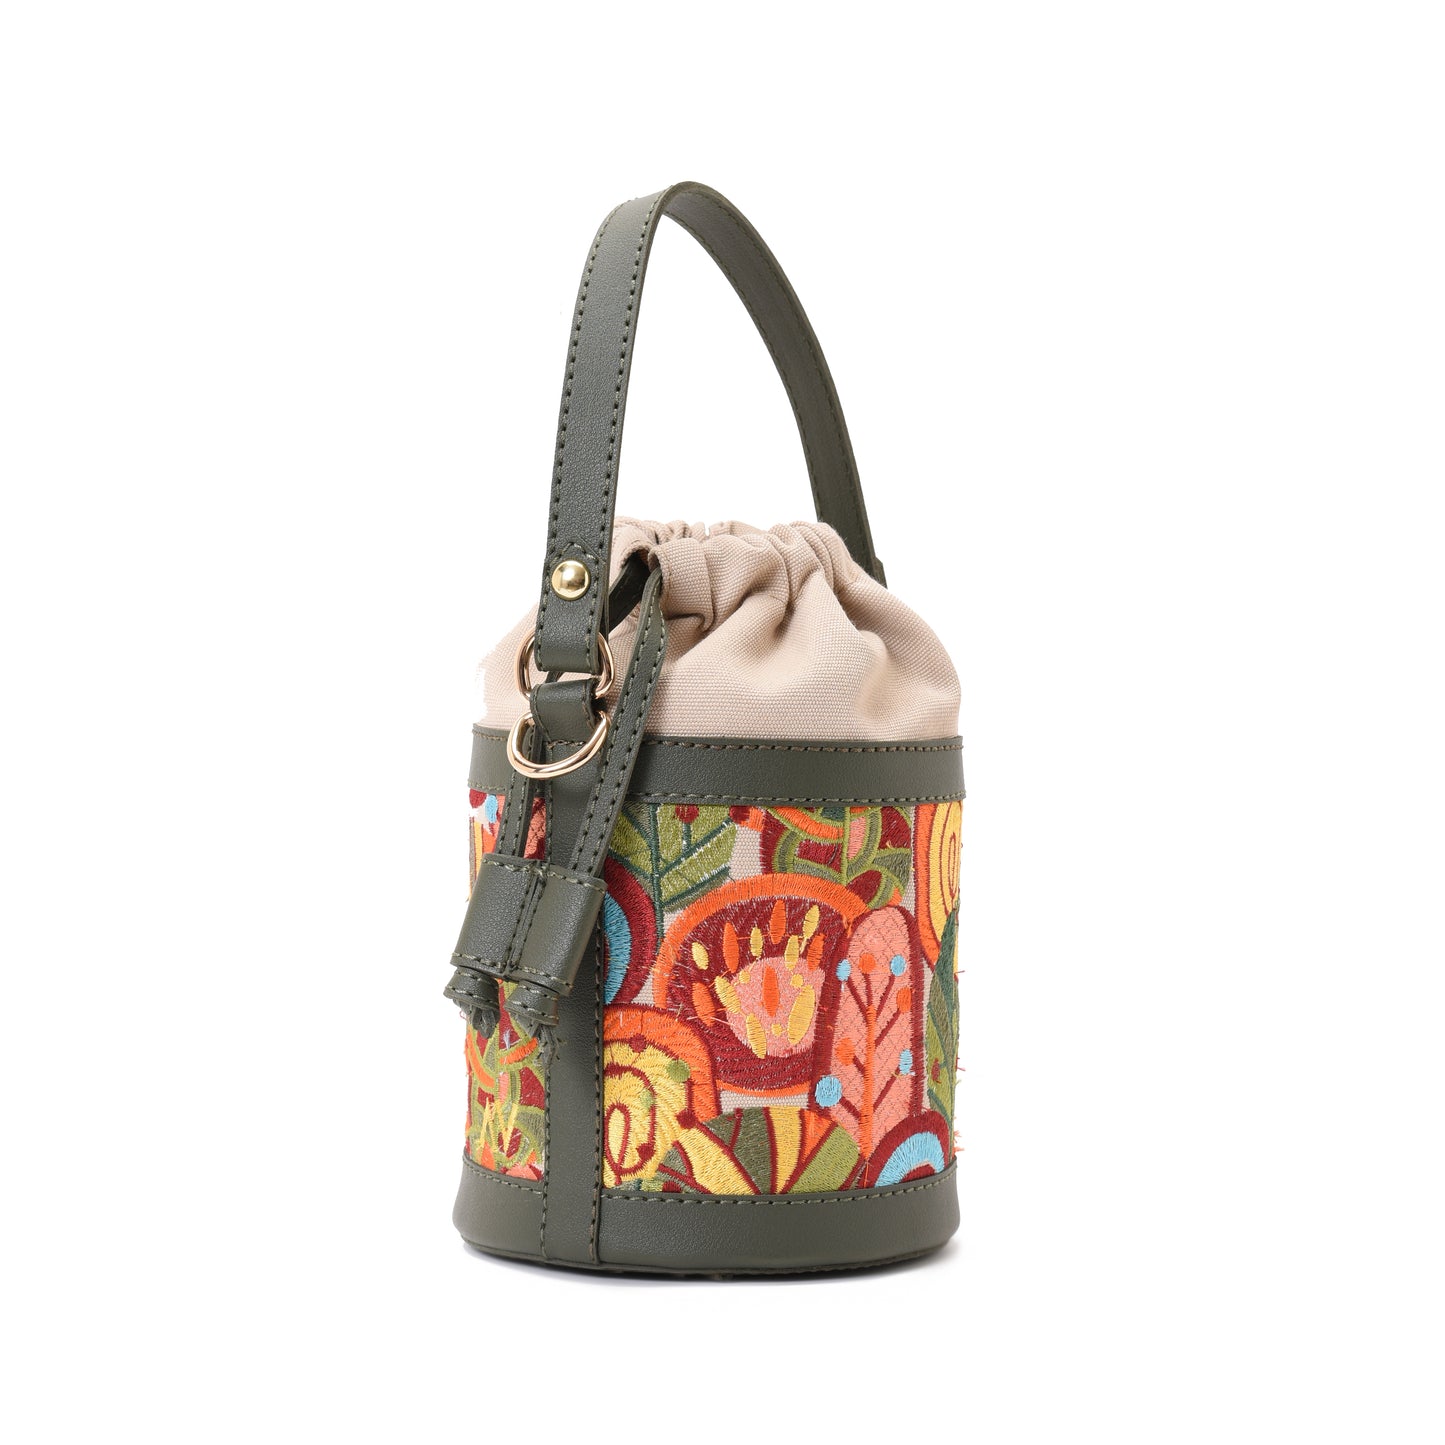 Retro Bucket Fall Handbag with Green belt -Code 914